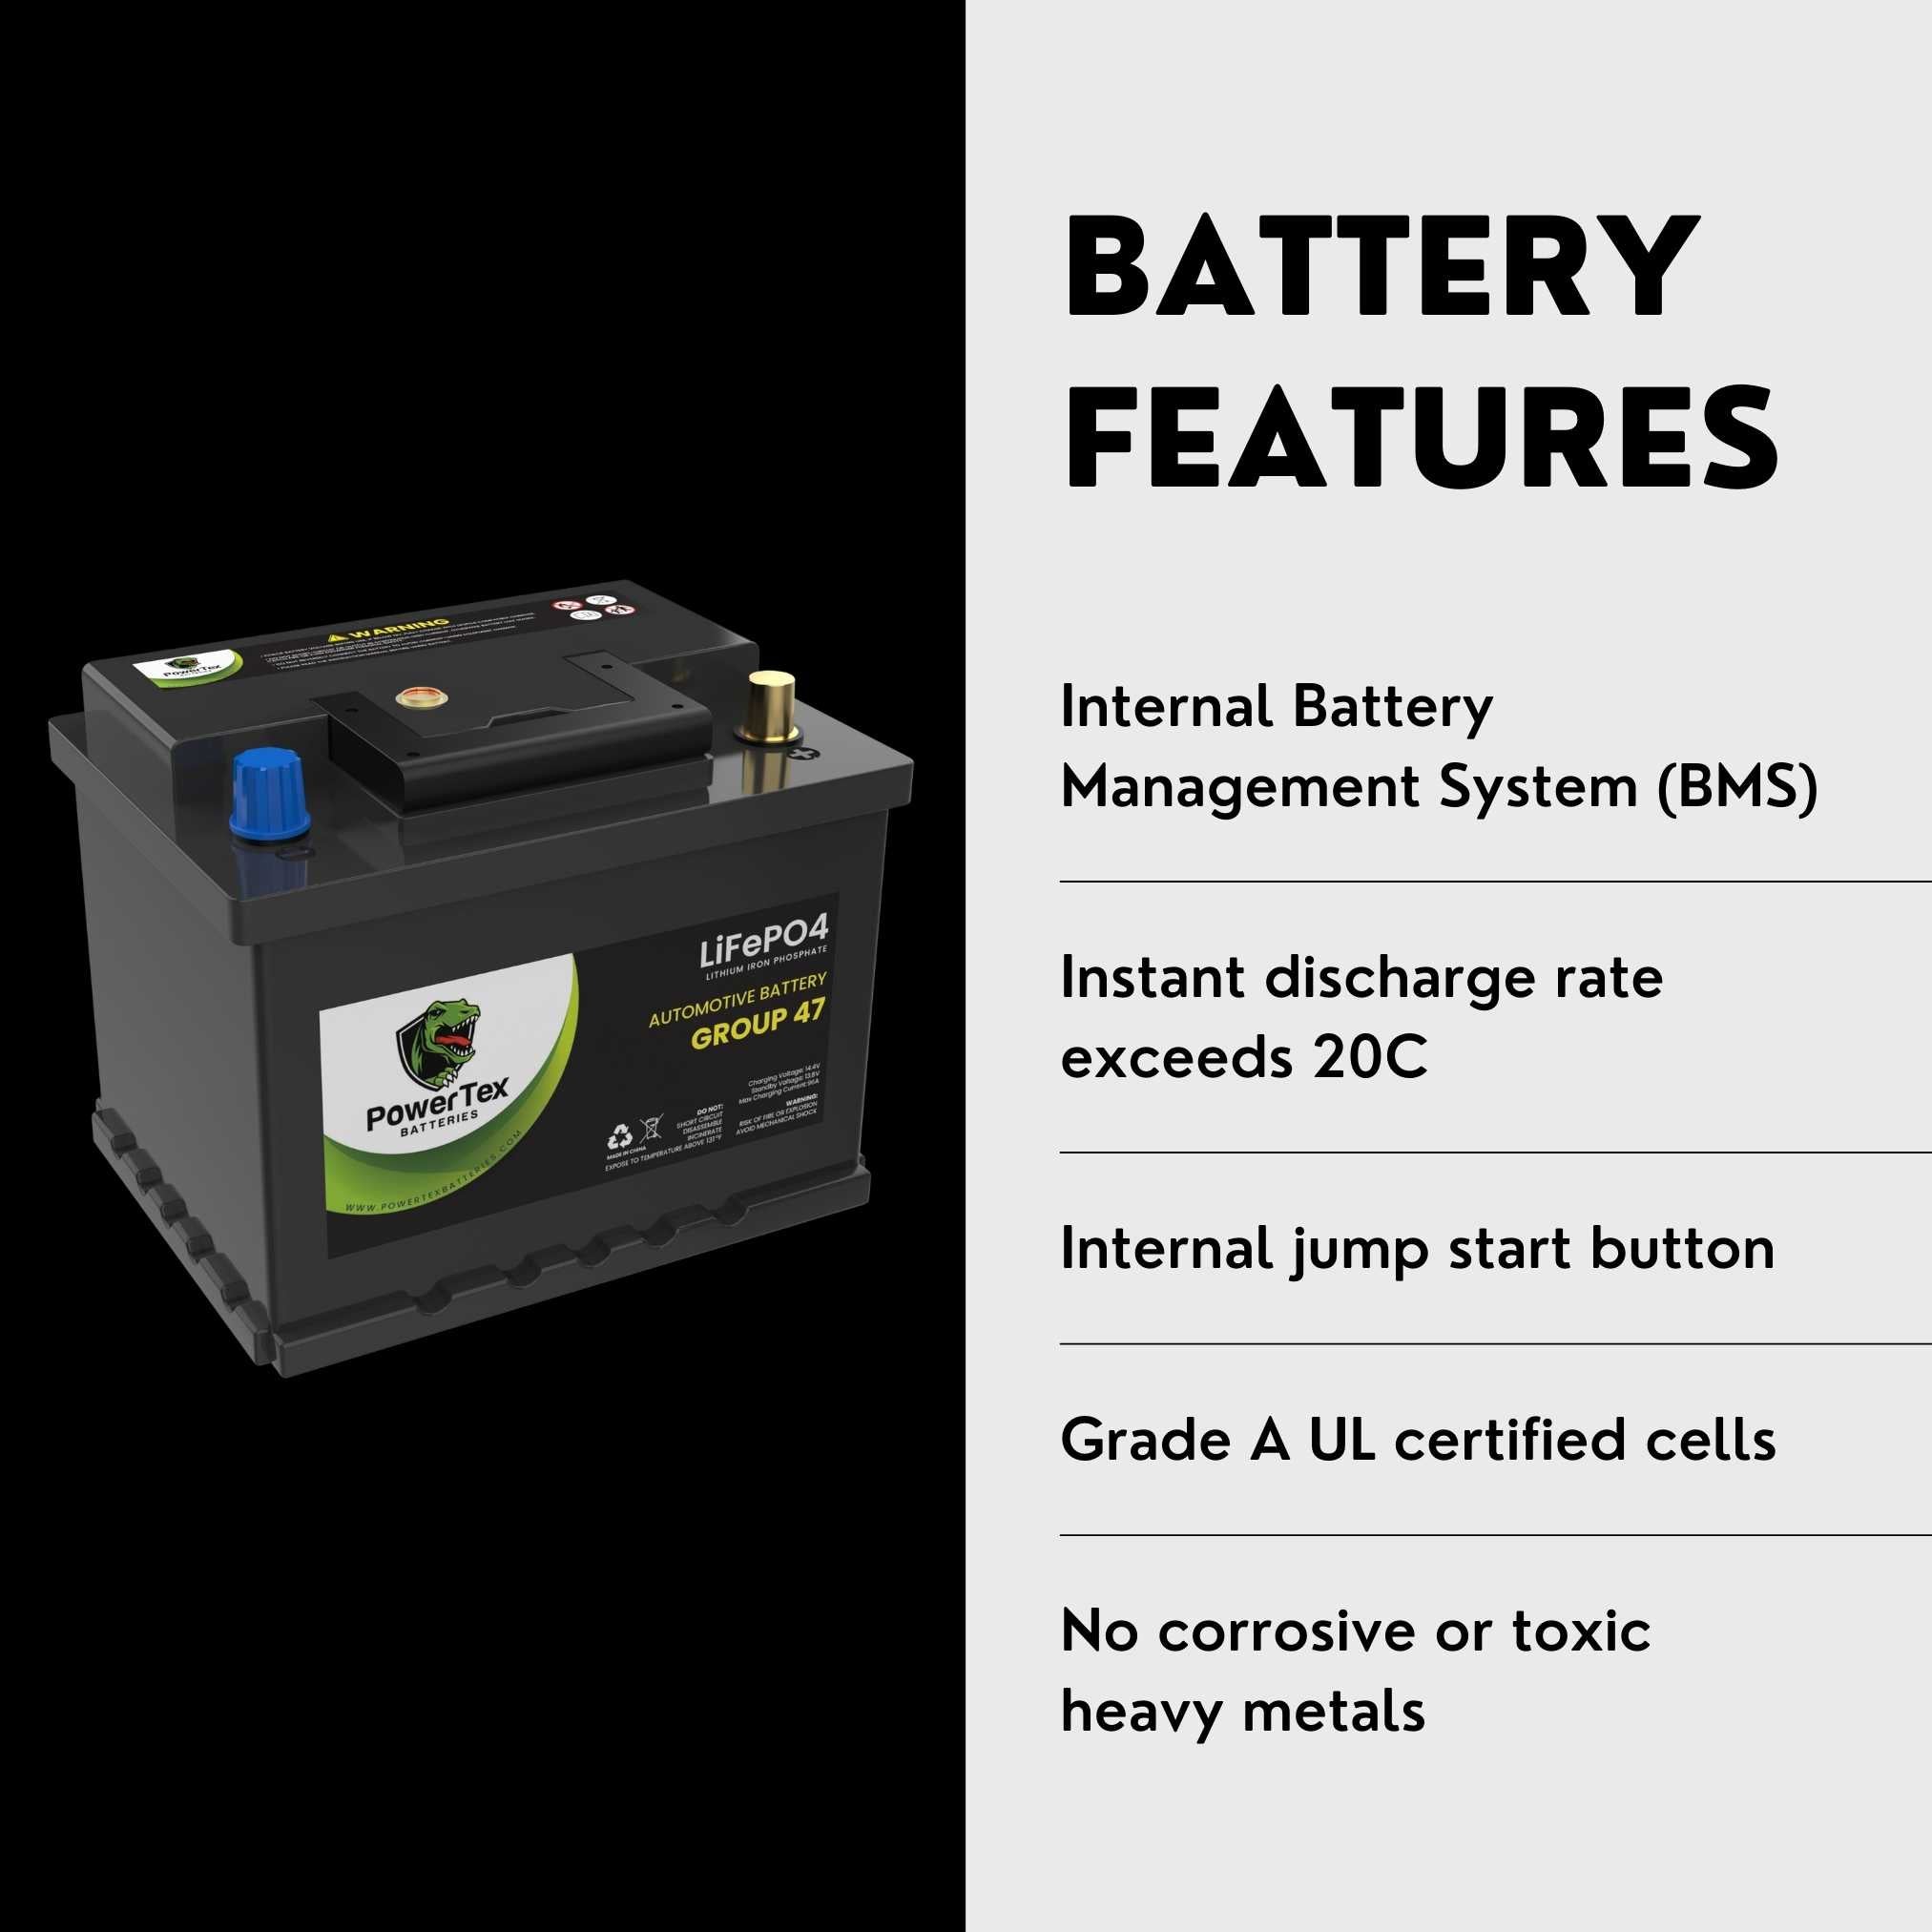 2020 Audi S3 Car Battery BCI Group 47 H5 Lithium Battery – PowerTex  Batteries